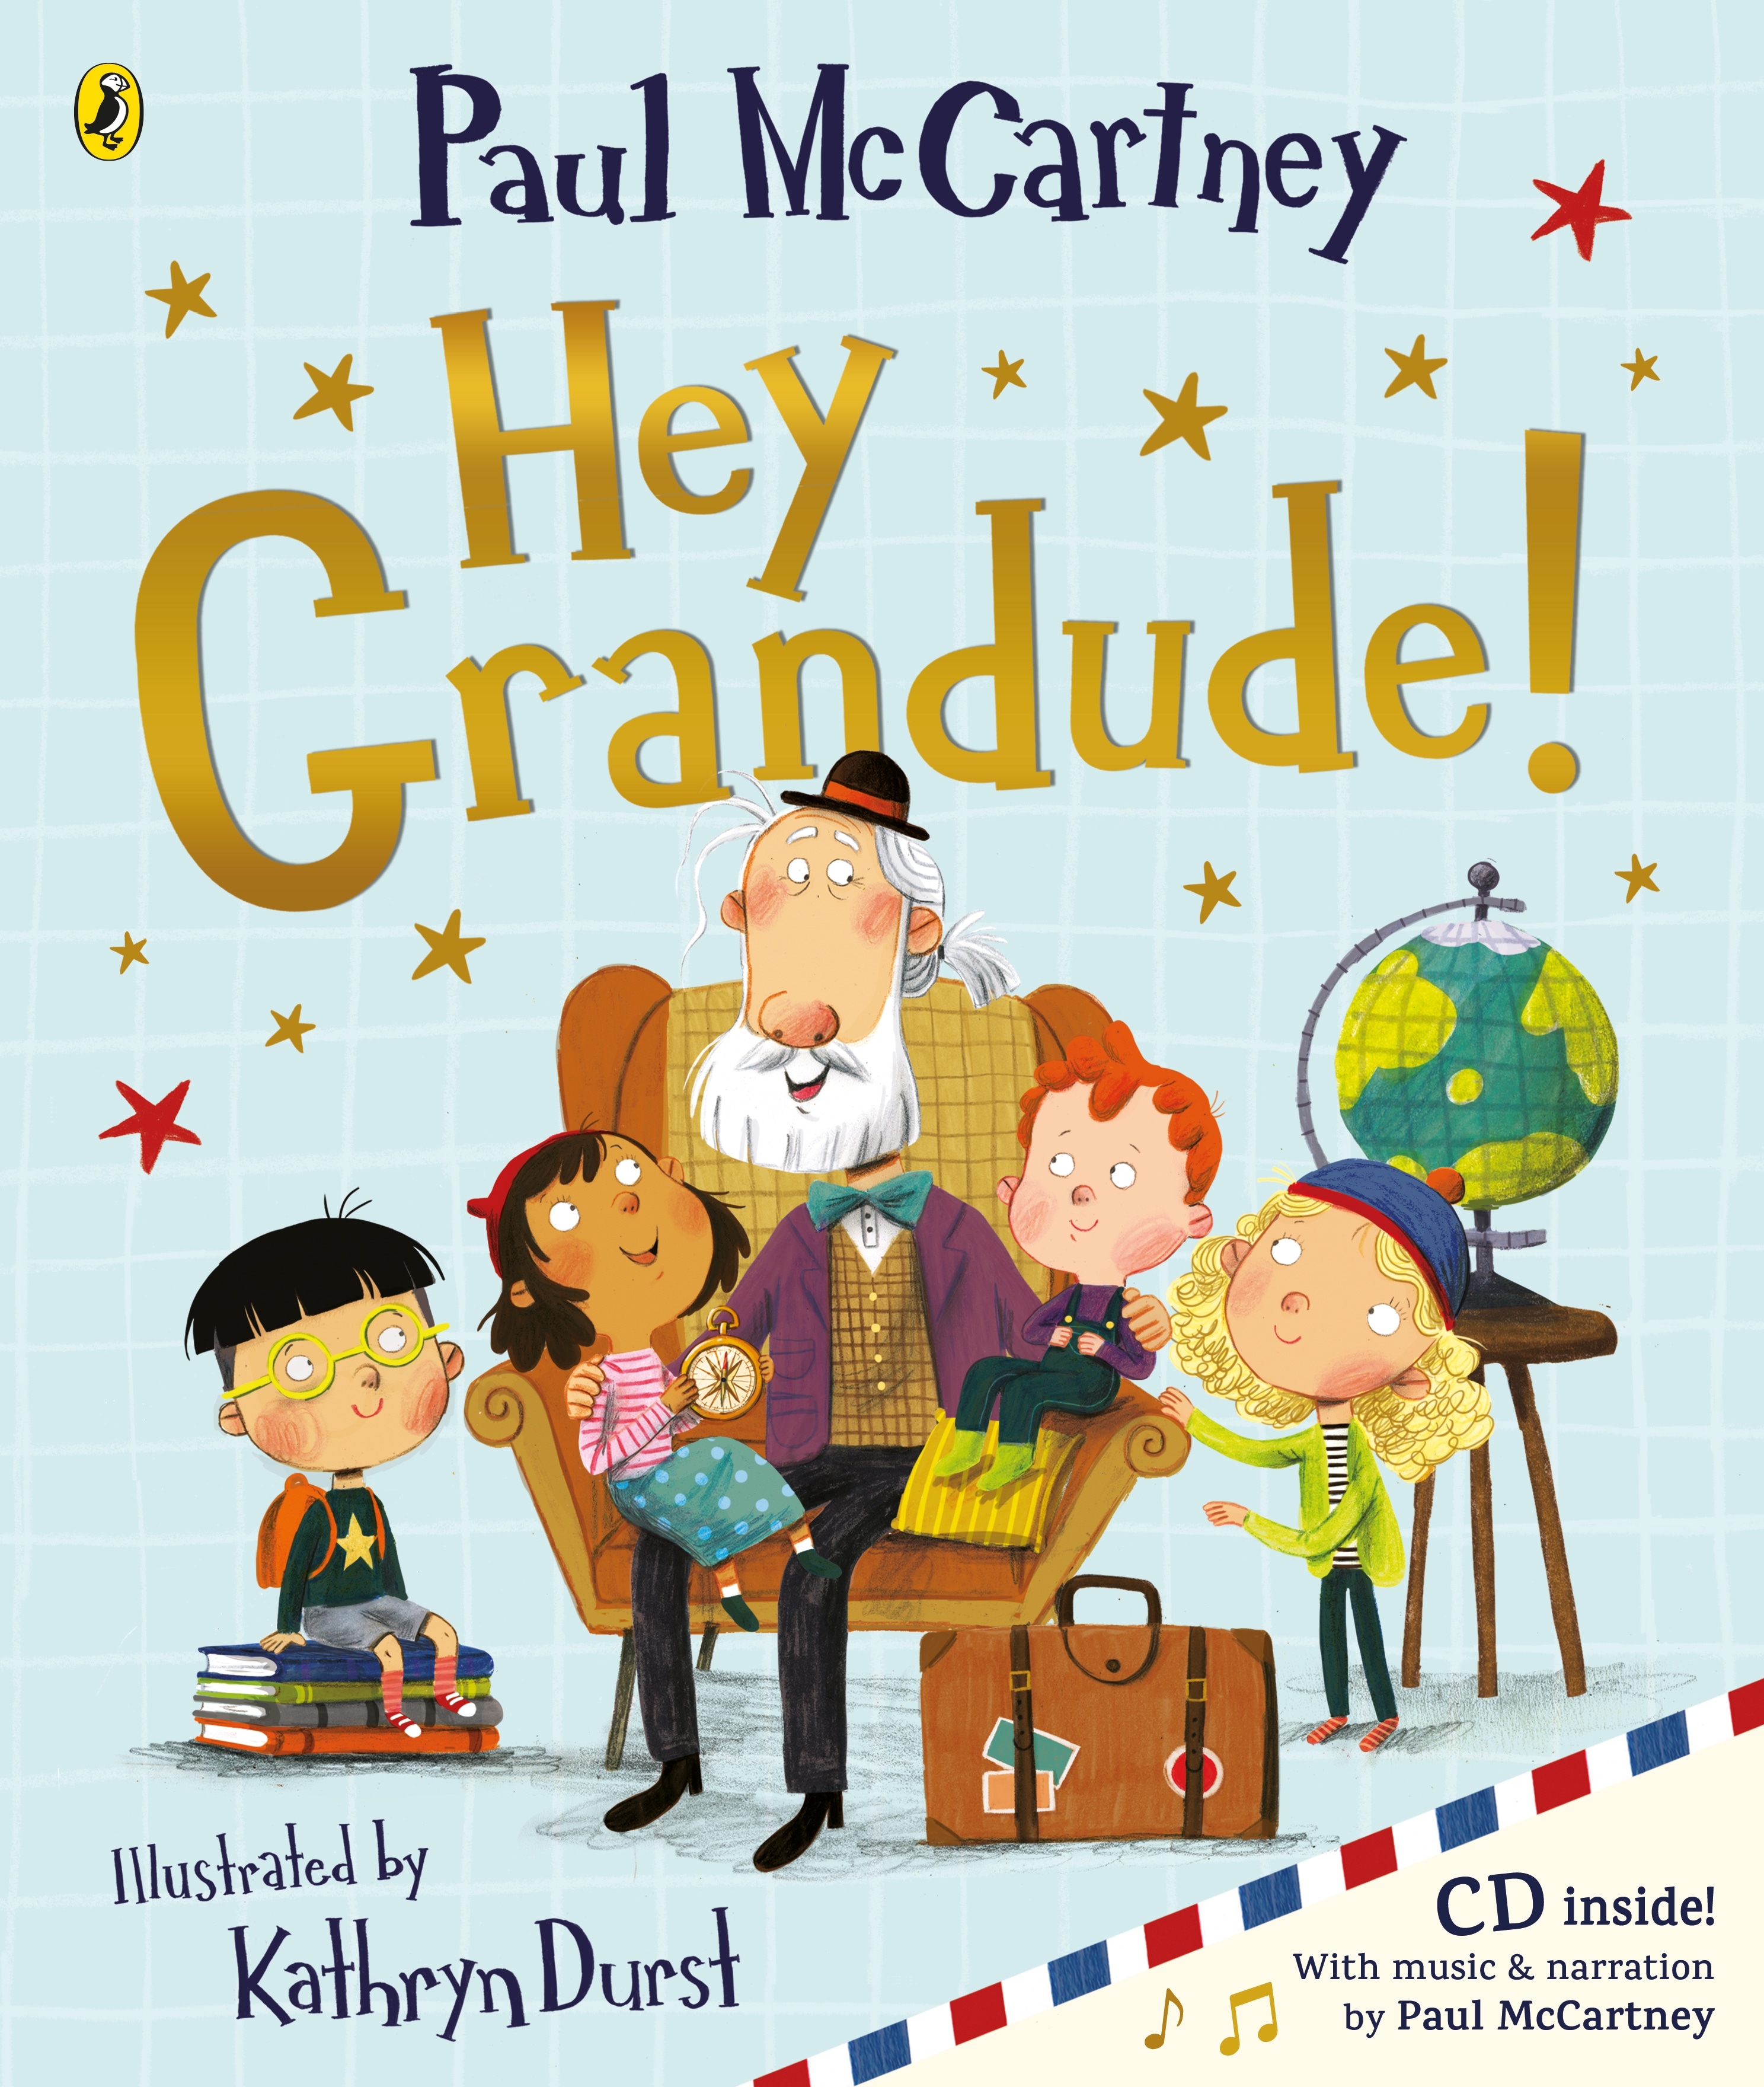 Book “Hey Grandude!” by Paul McCartney — September 17, 2020